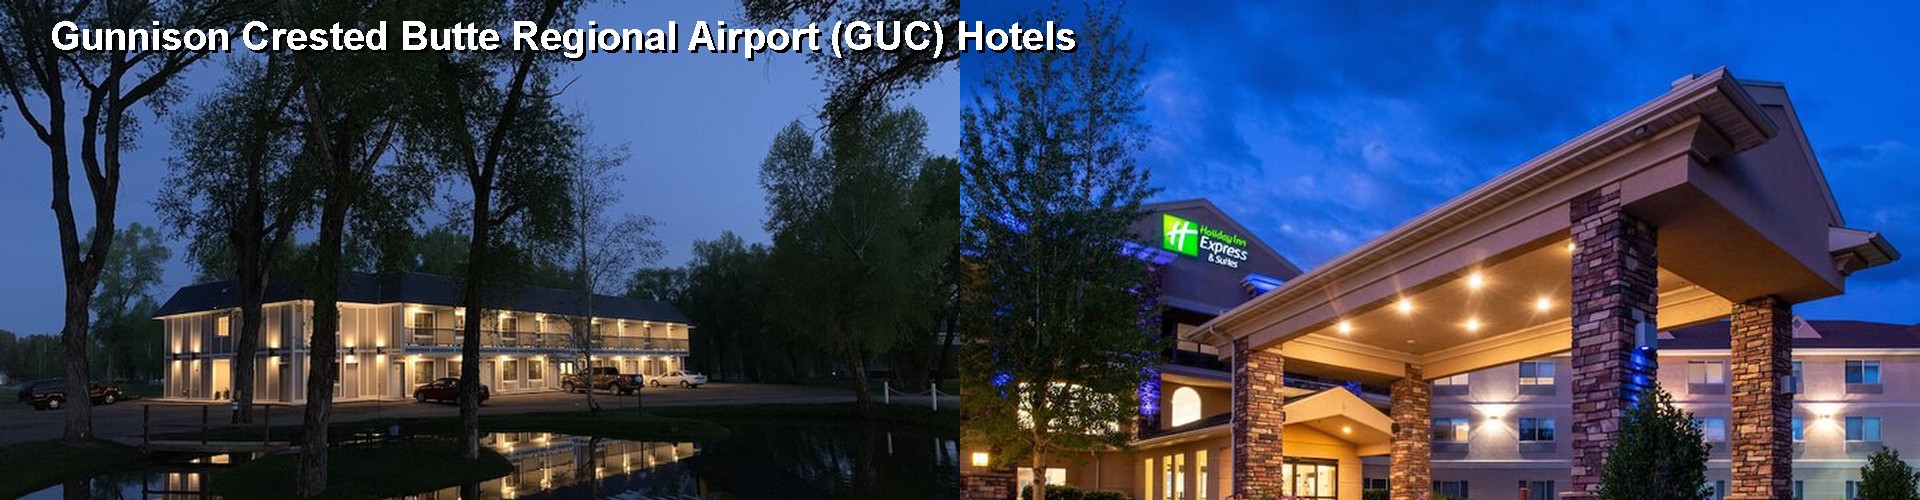 5 Best Hotels near Gunnison Crested Butte Regional Airport (GUC)